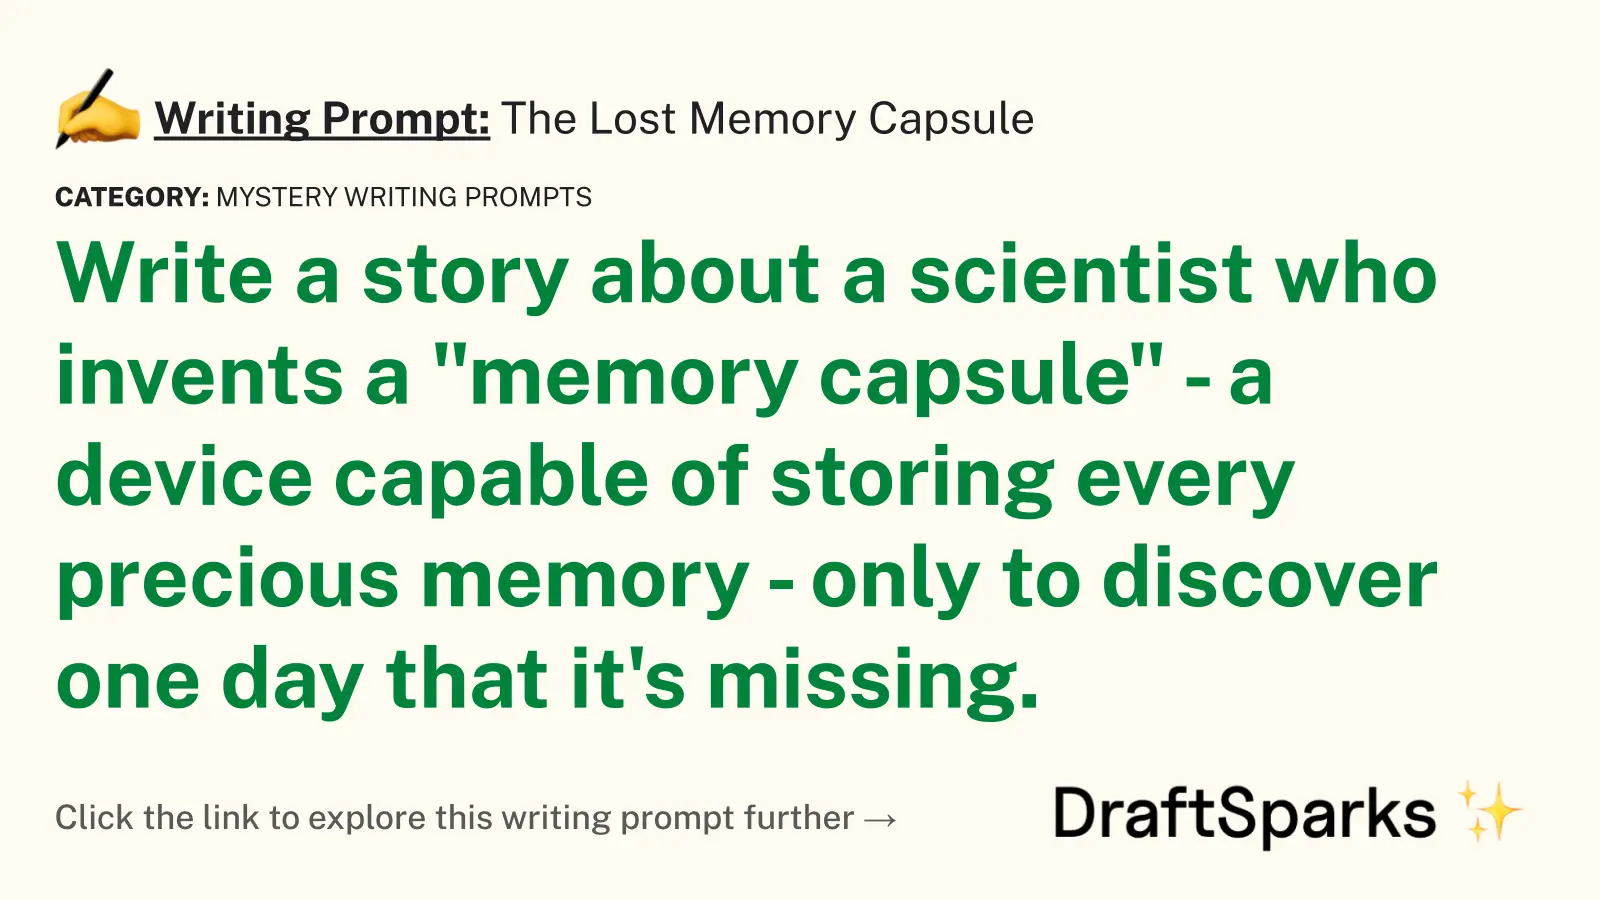 The Lost Memory Capsule